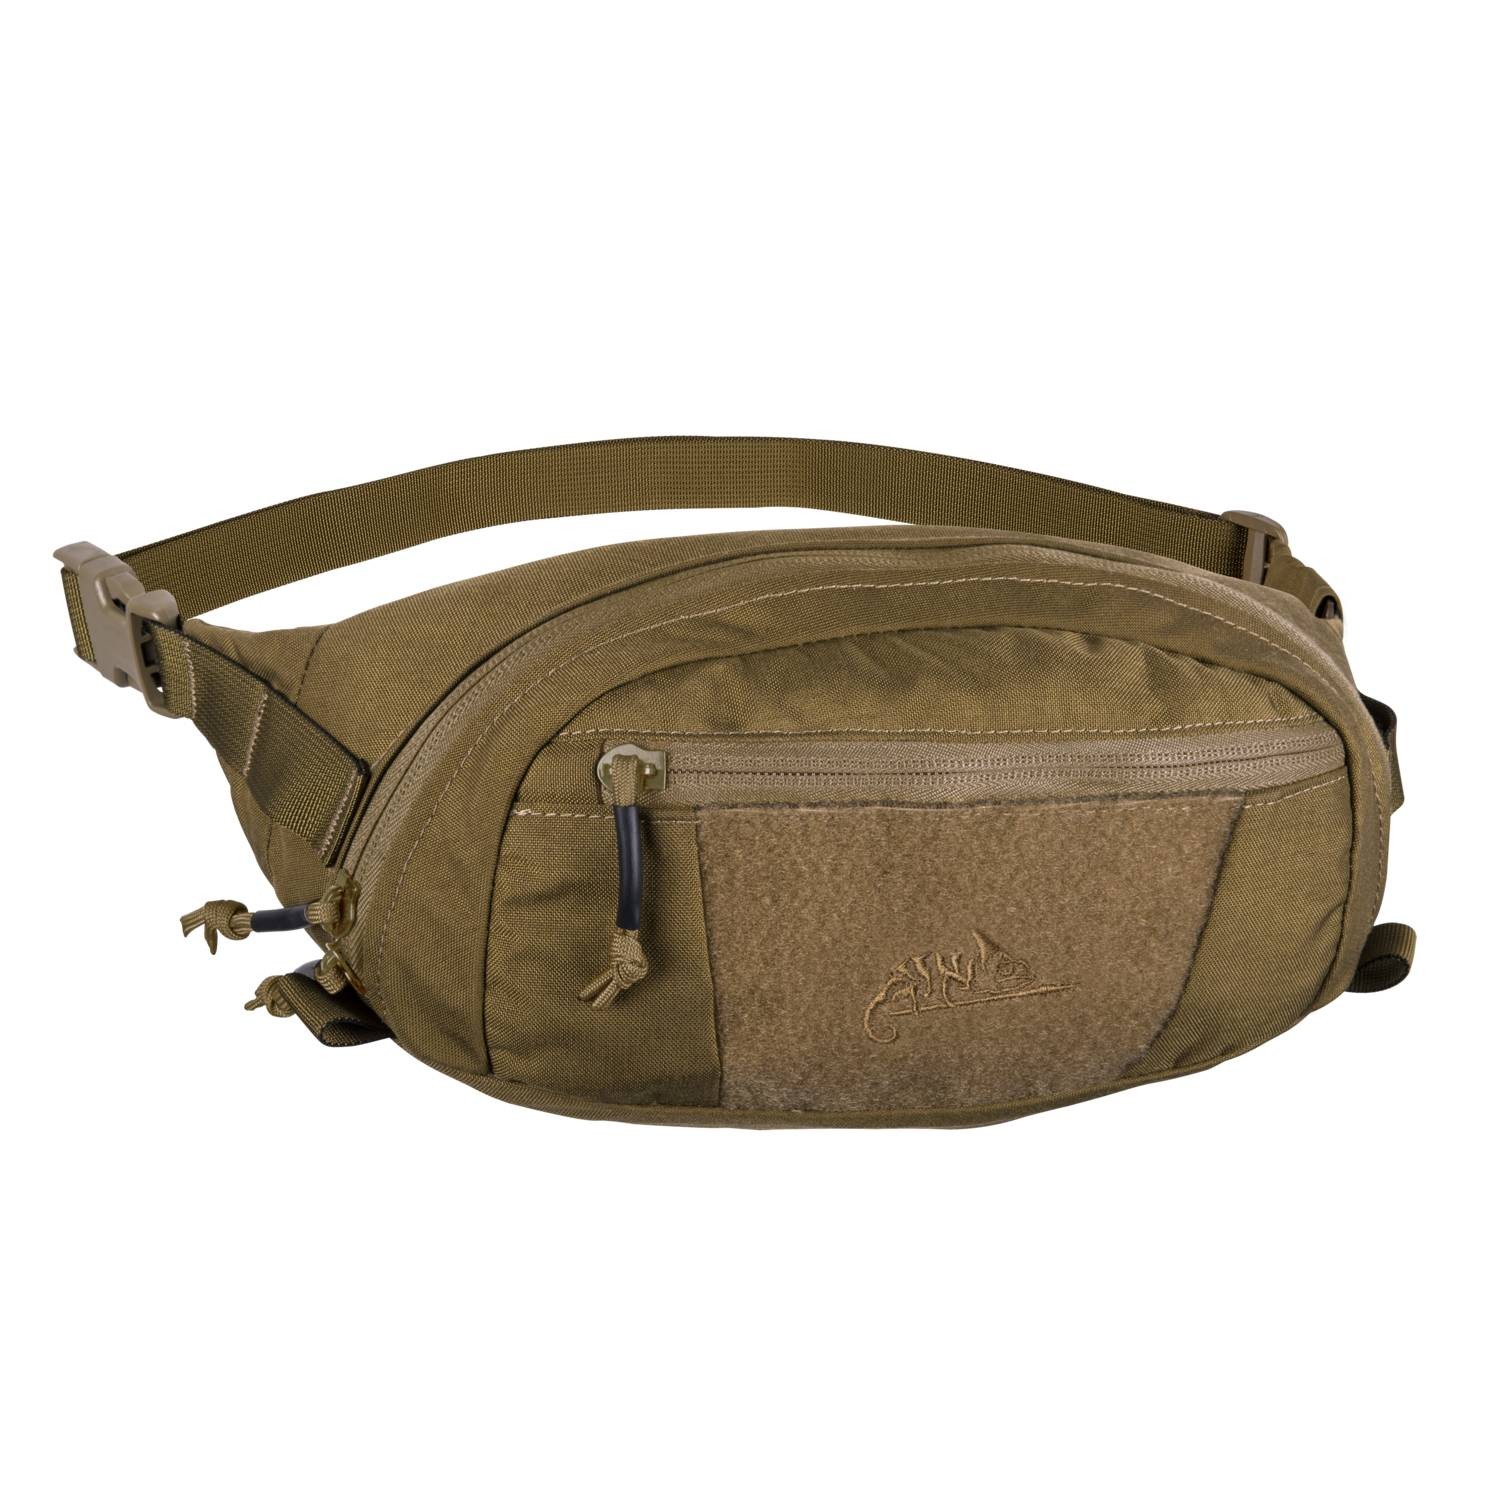 2-in-1 Convertible Belt Bag